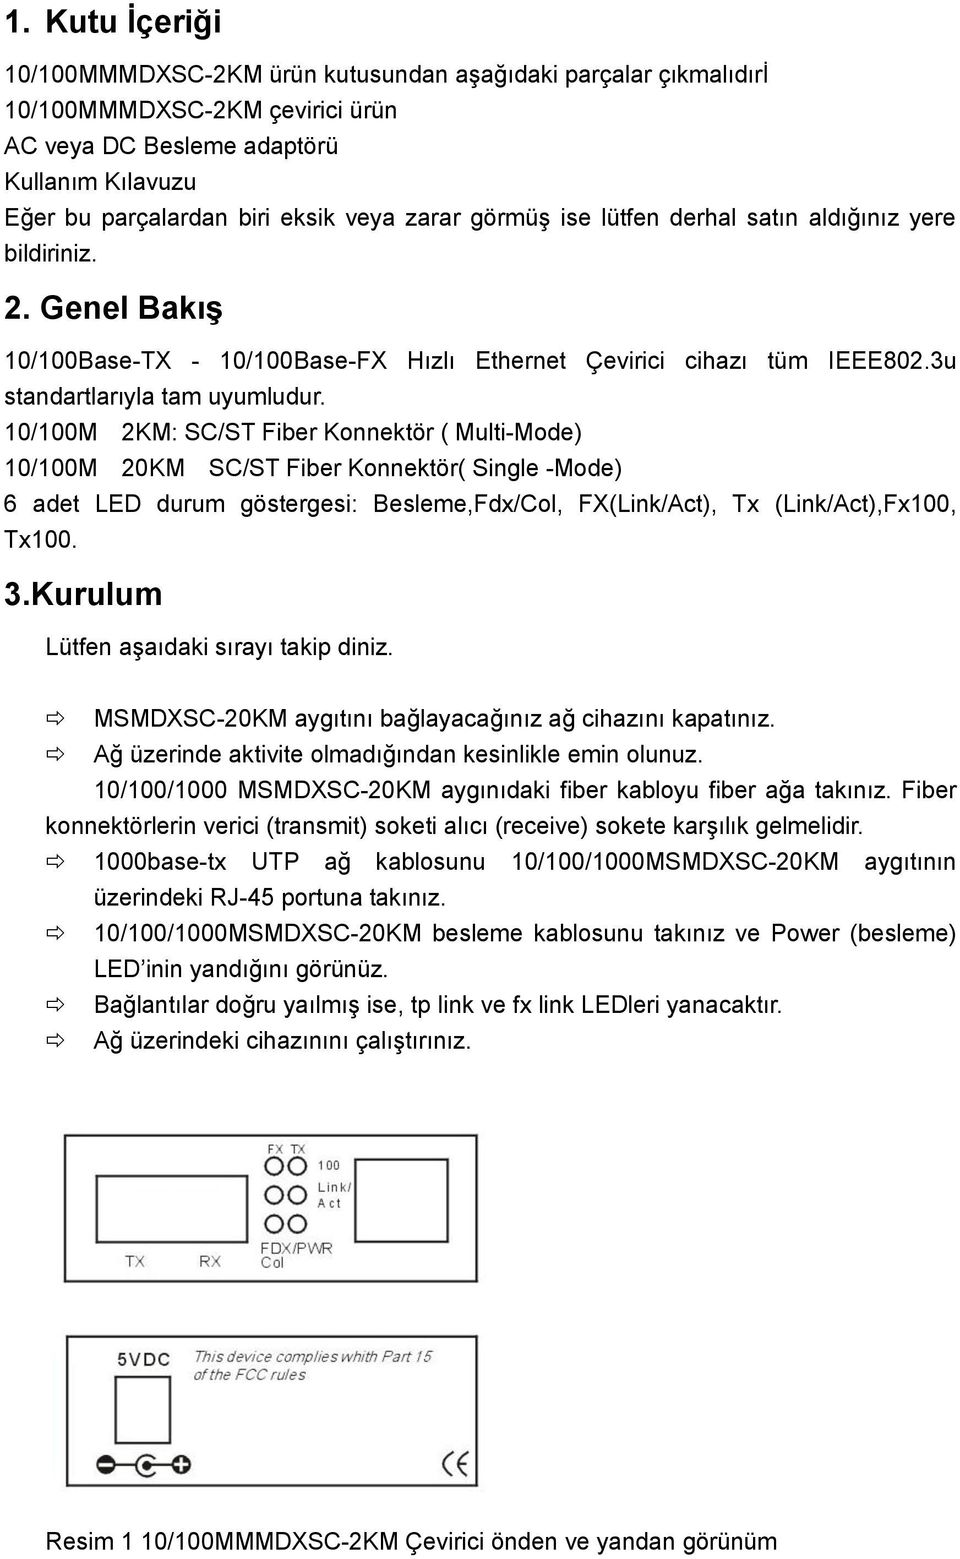 10/100M 2KM: SC/ST Fiber Konnektör ( Multi-Mode) 10/100M 20KM SC/ST Fiber Konnektör( Single -Mode) 6 adet LED durum göstergesi: Besleme,Fdx/Col, FX(Link/Act), Tx (Link/Act),Fx100, Tx100. 3.